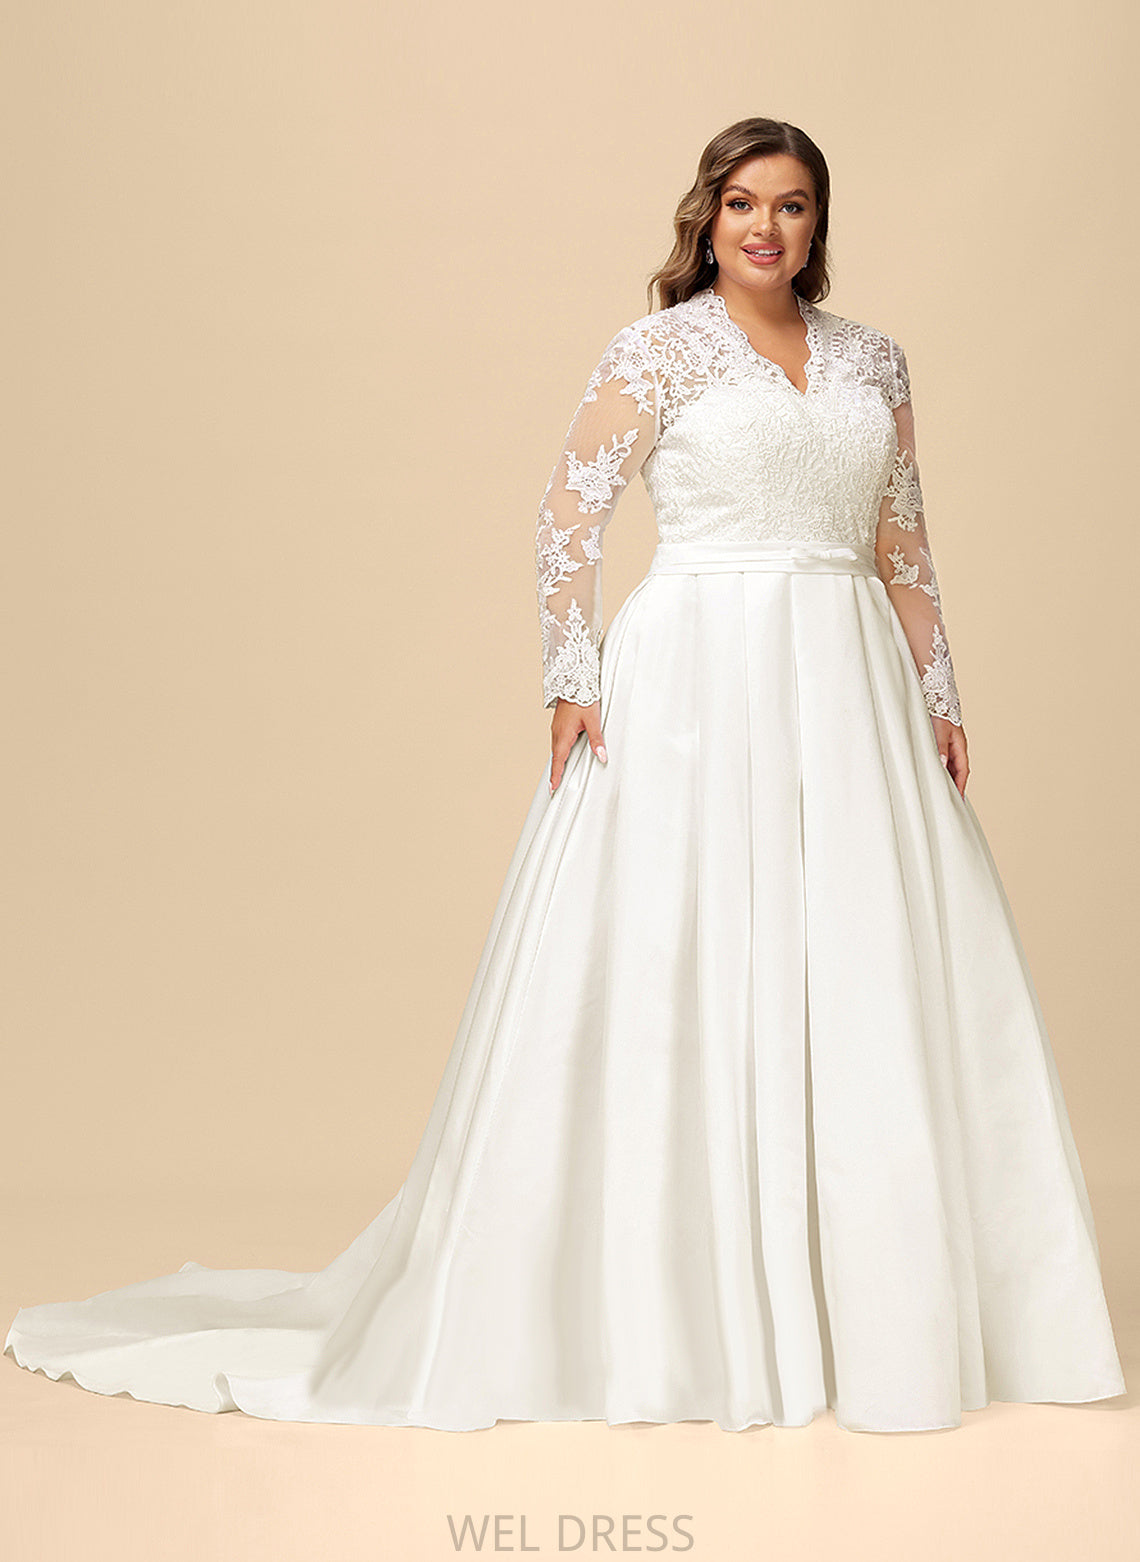 Bow(s) Lace With Dress Salma V-neck Wedding Dresses Wedding Train Court Satin Ball-Gown/Princess